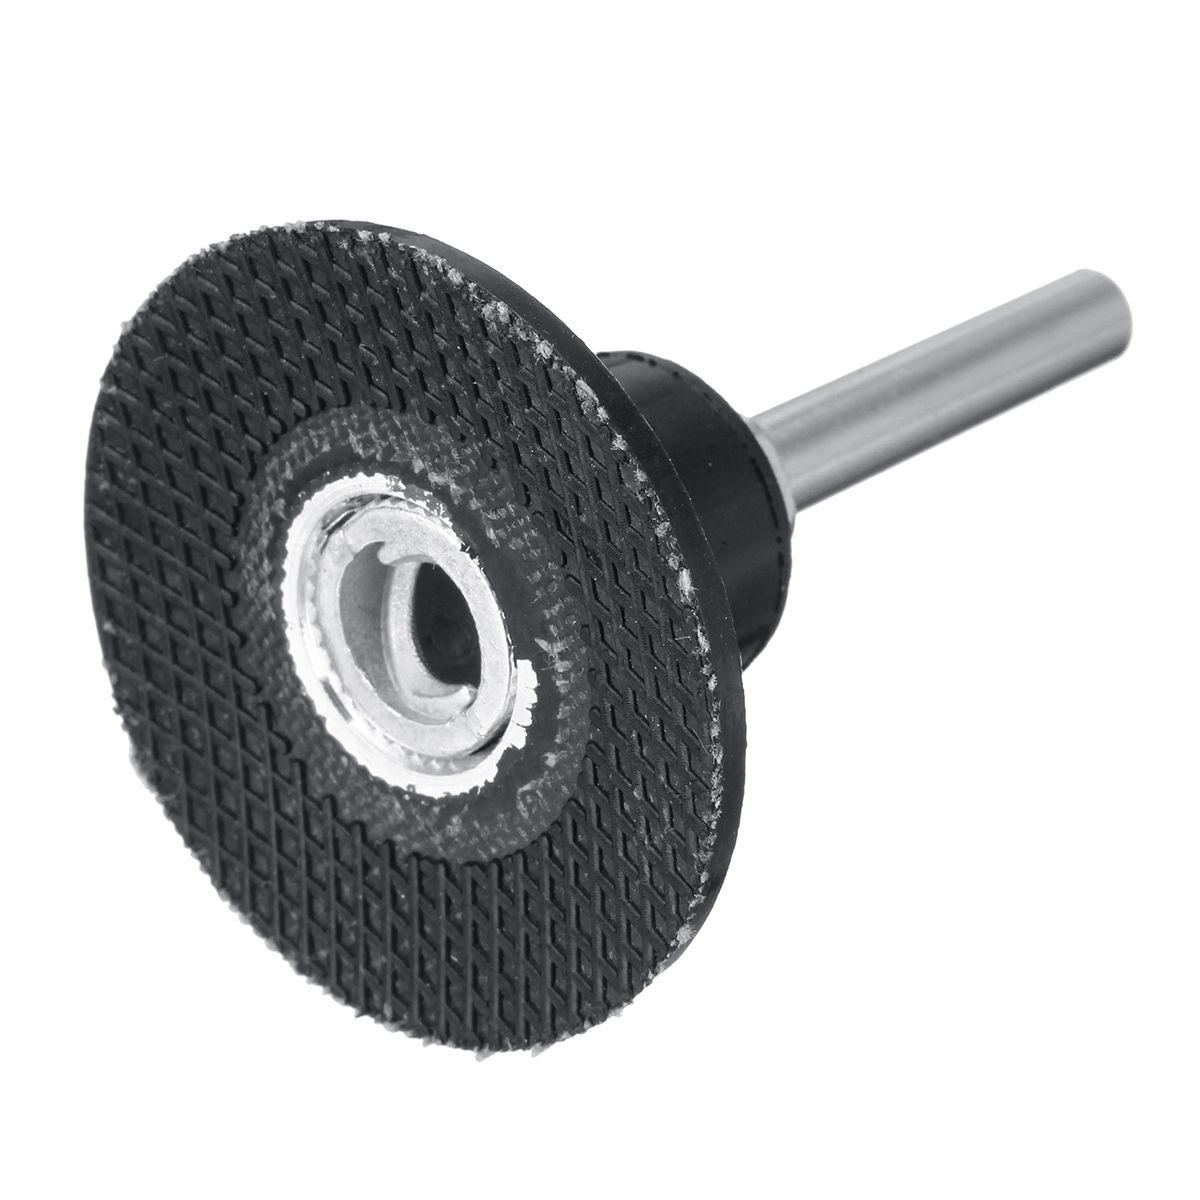 70pcs-Sanding-Discs-Set-2-Type-R-Roll-Lock-Discs-Pads-Sanding-Abrasives-US-1729637